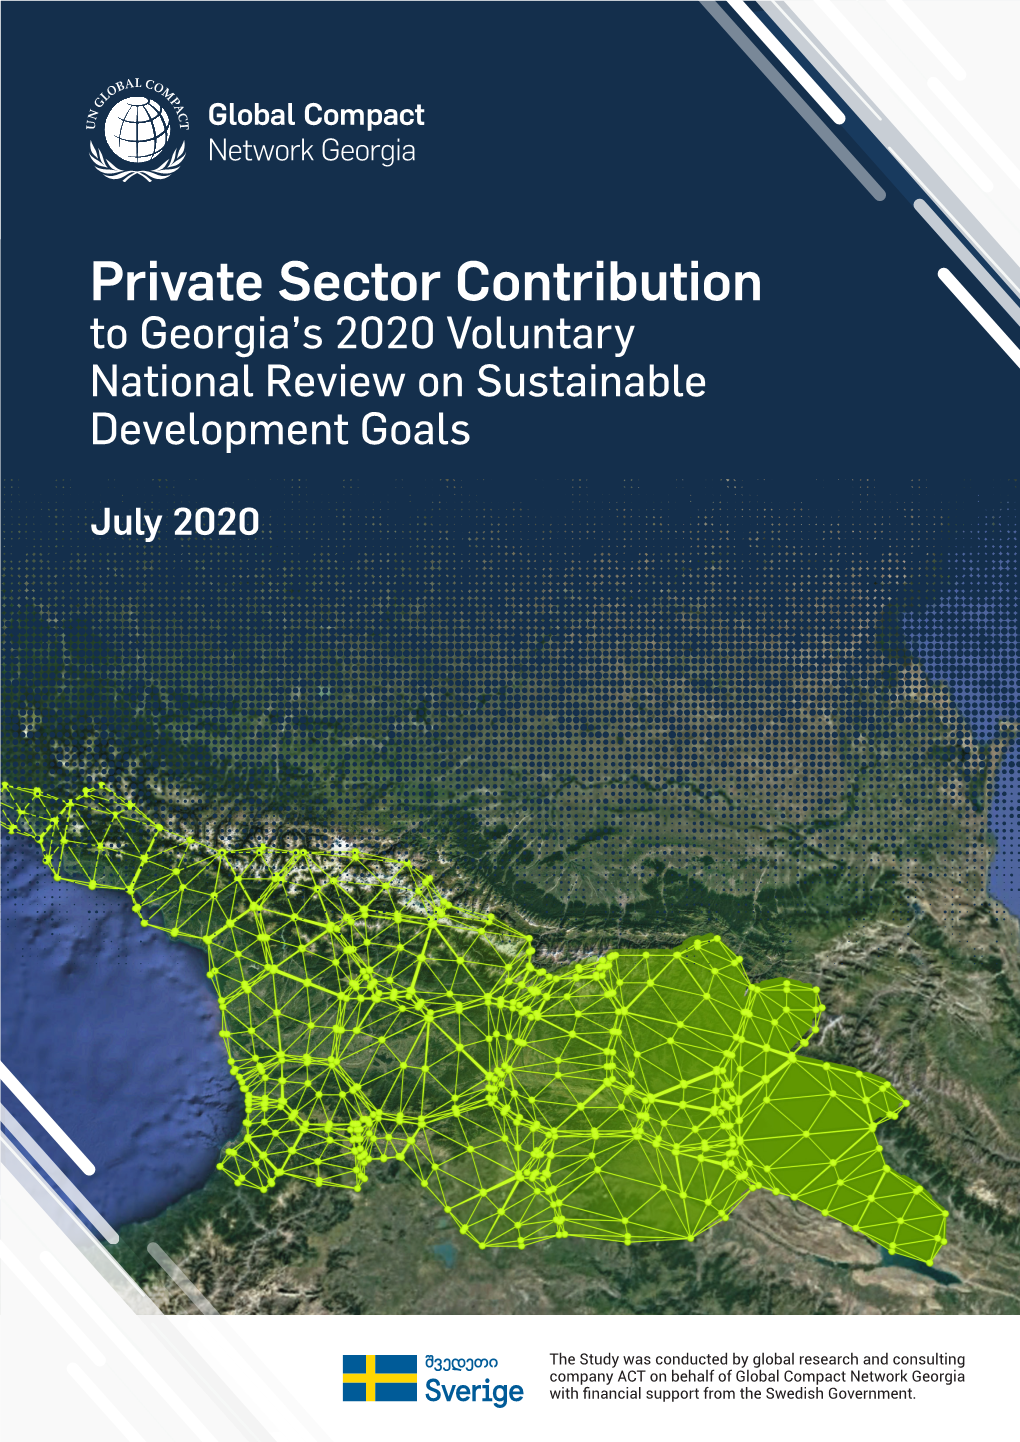 Private Sector Contribution to Sdgs in Georgia